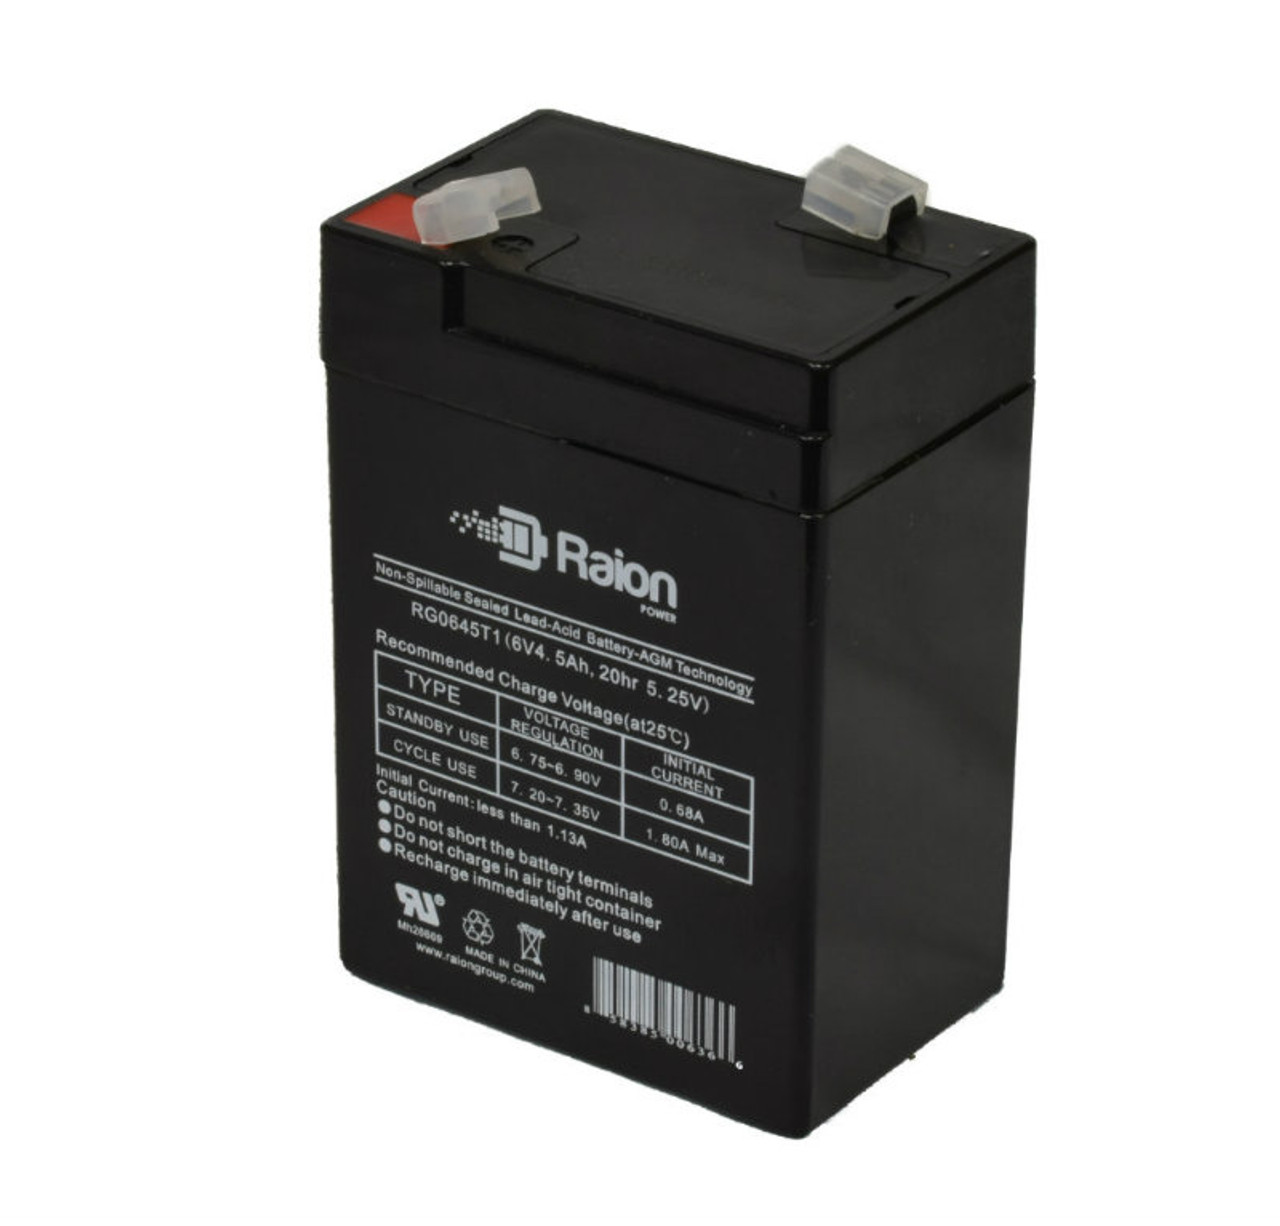 Raion Power RG0645T1 6V 4.5Ah Replacement Battery Cartridge for Sentry Lite 9985